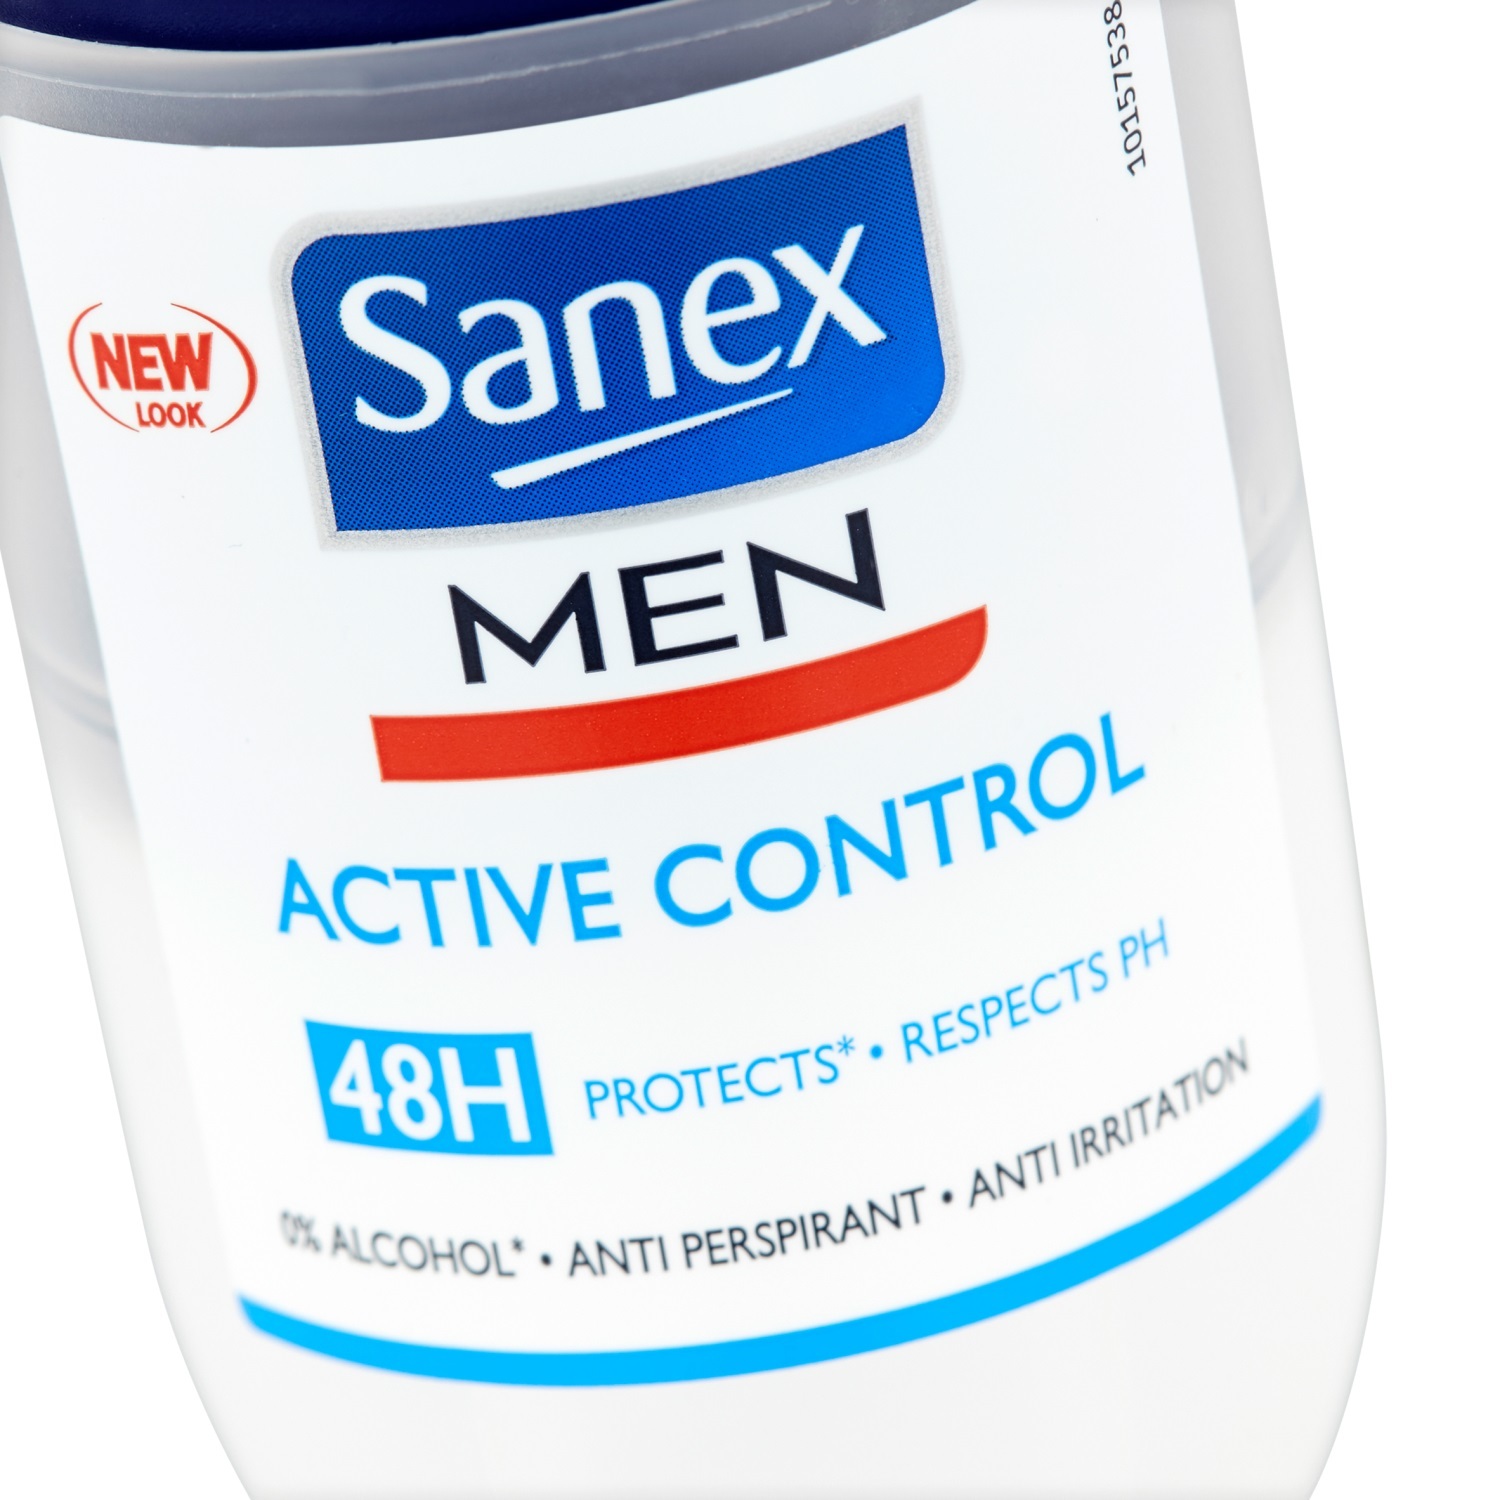 Sanex Men Active Control Roll On Anti-Perspirant Image 2